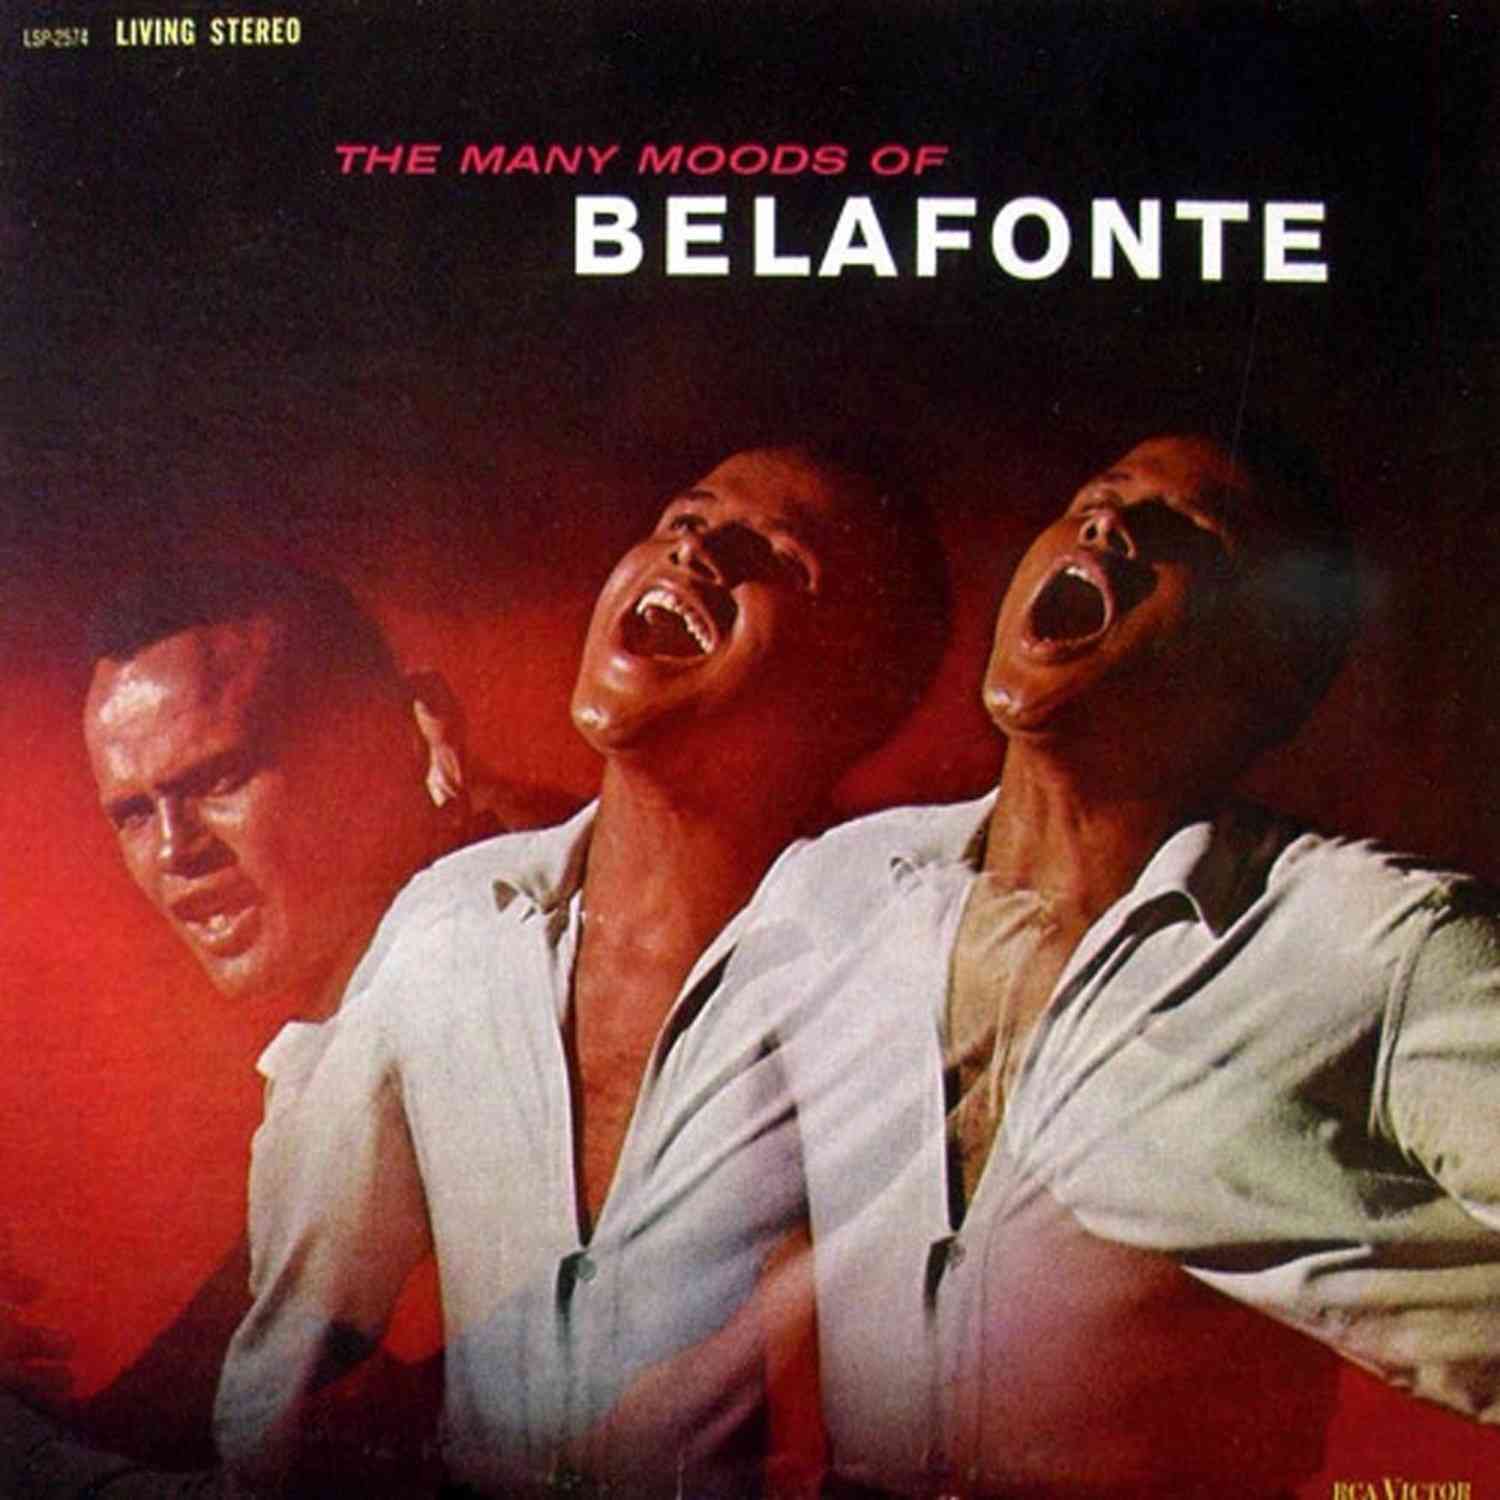 Schallplatte Harry Belafonte - The Many Moods of Harry Belafonte (RCA/Impex) im Test, Bild 1